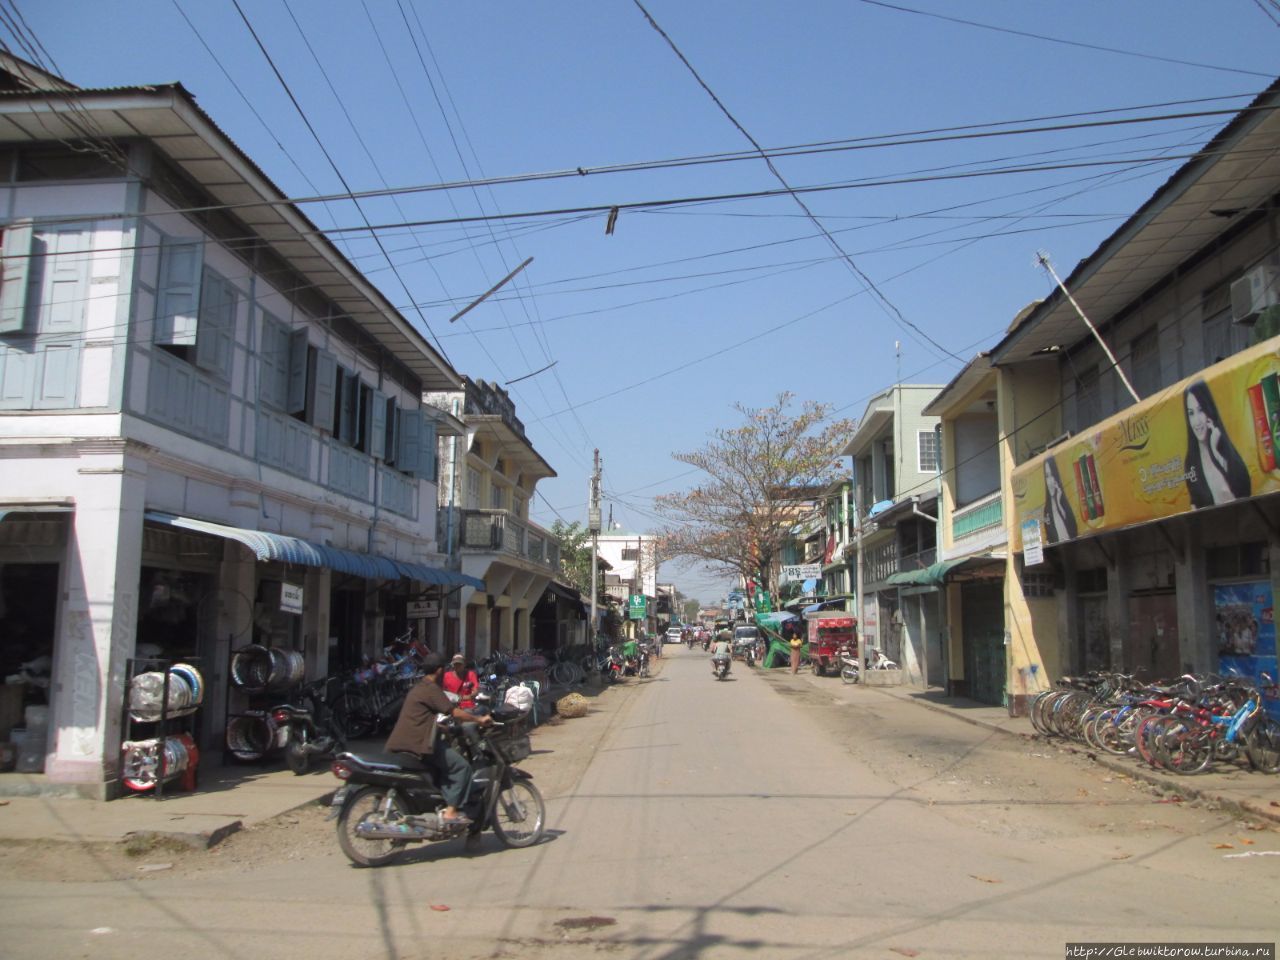 Прогулка по кварталу мусульман, индуистов и китайцев Таунгу, Мьянма